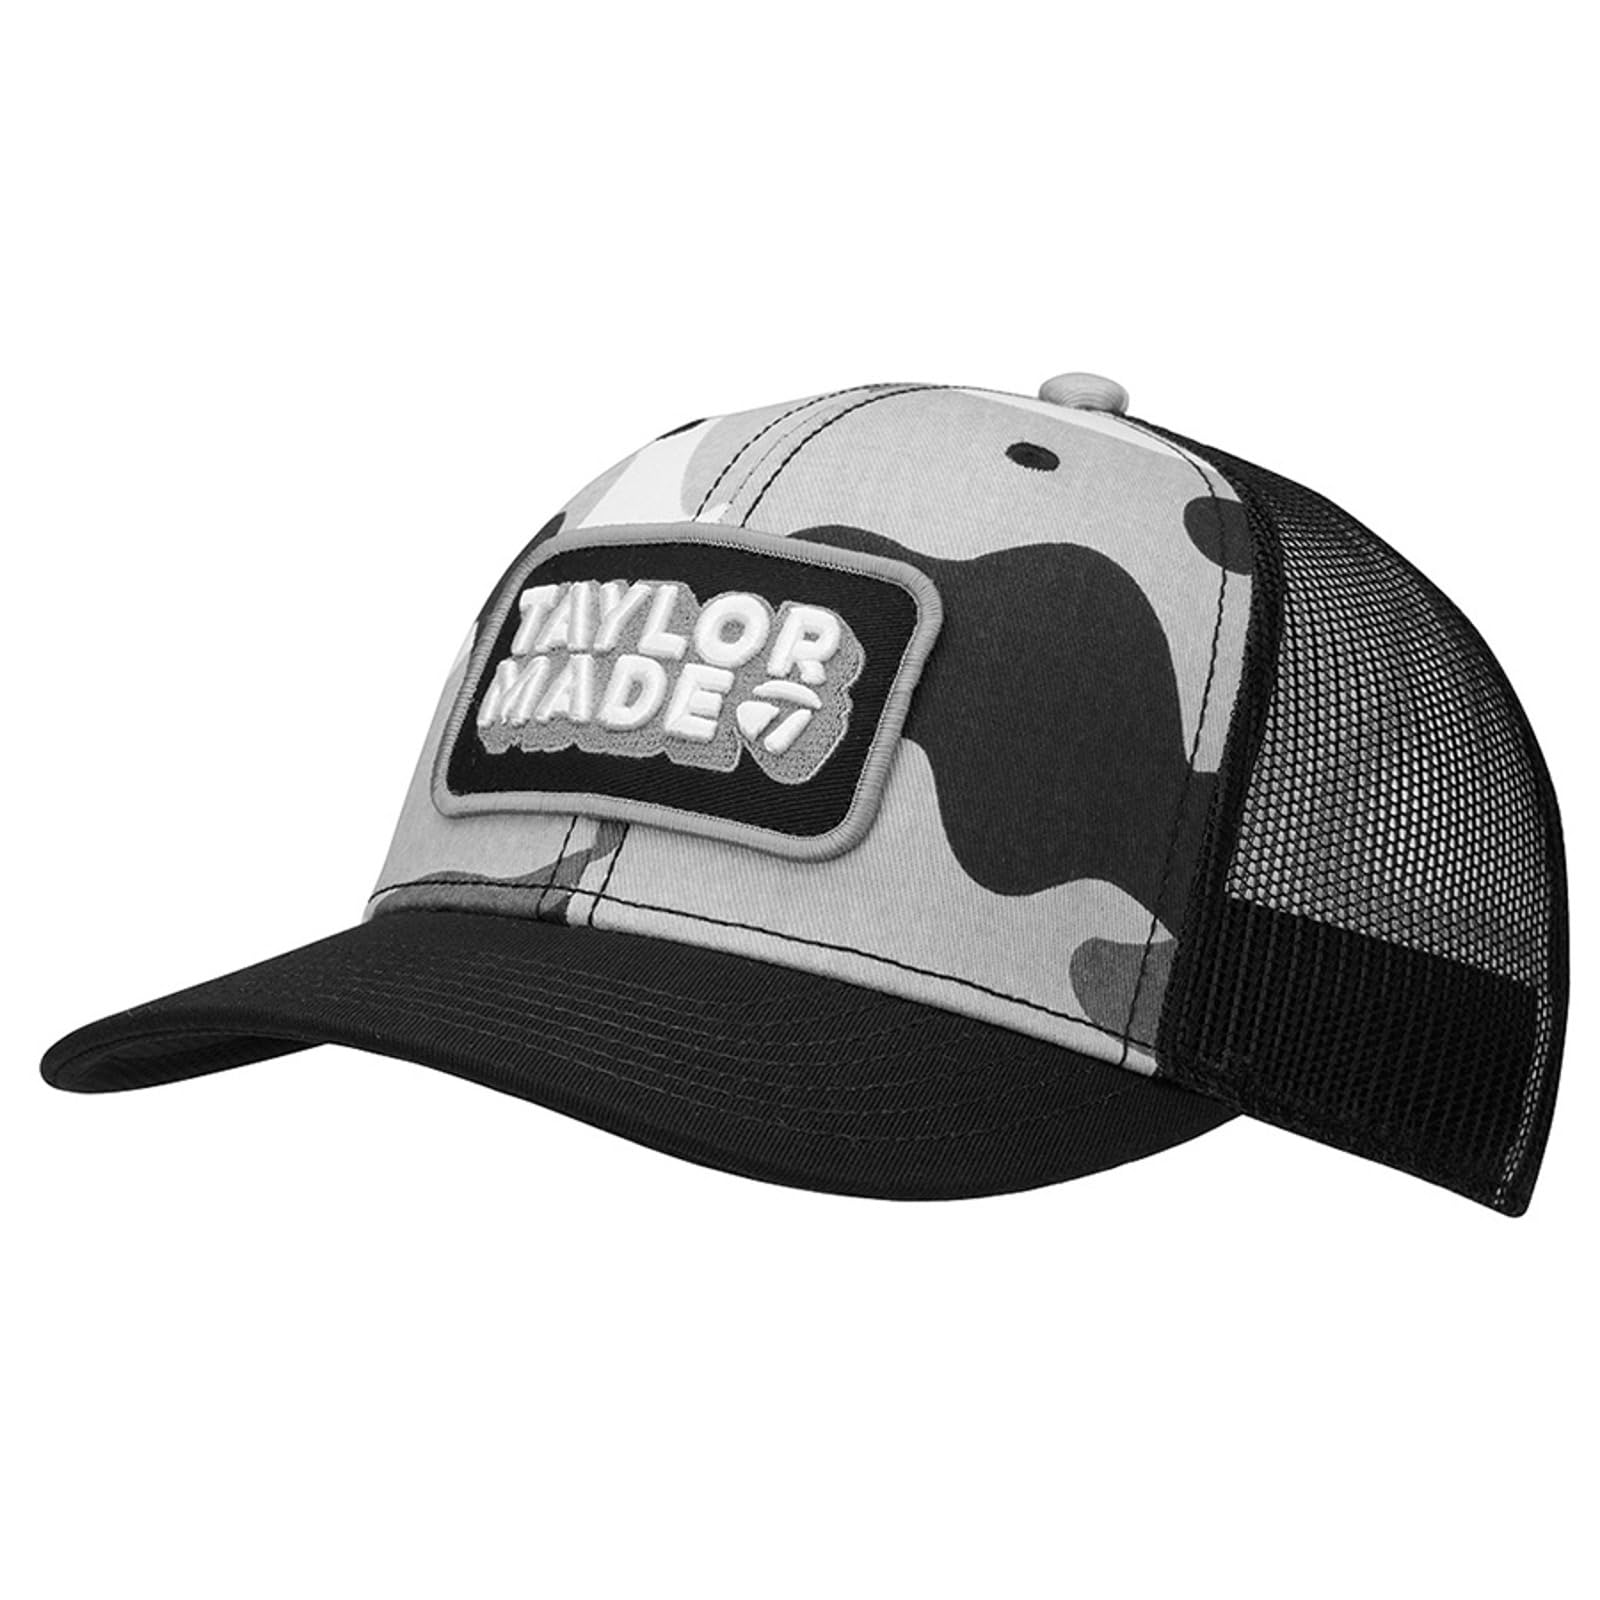 TaylorMade Men's Retro Trucker Hat